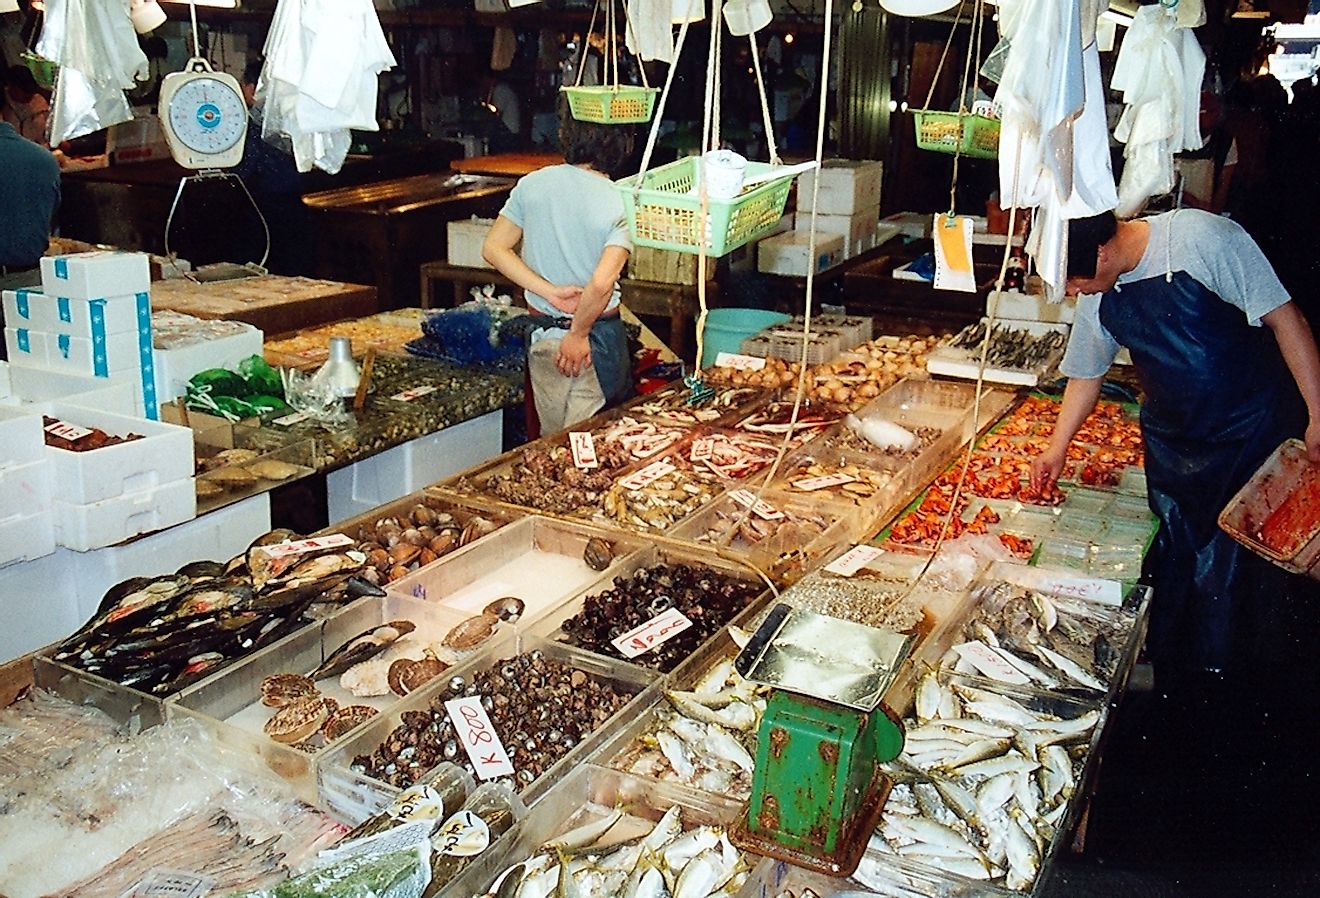 Tsukiji Fish Market. Image credit: Arian Zwegers/Flickr.com